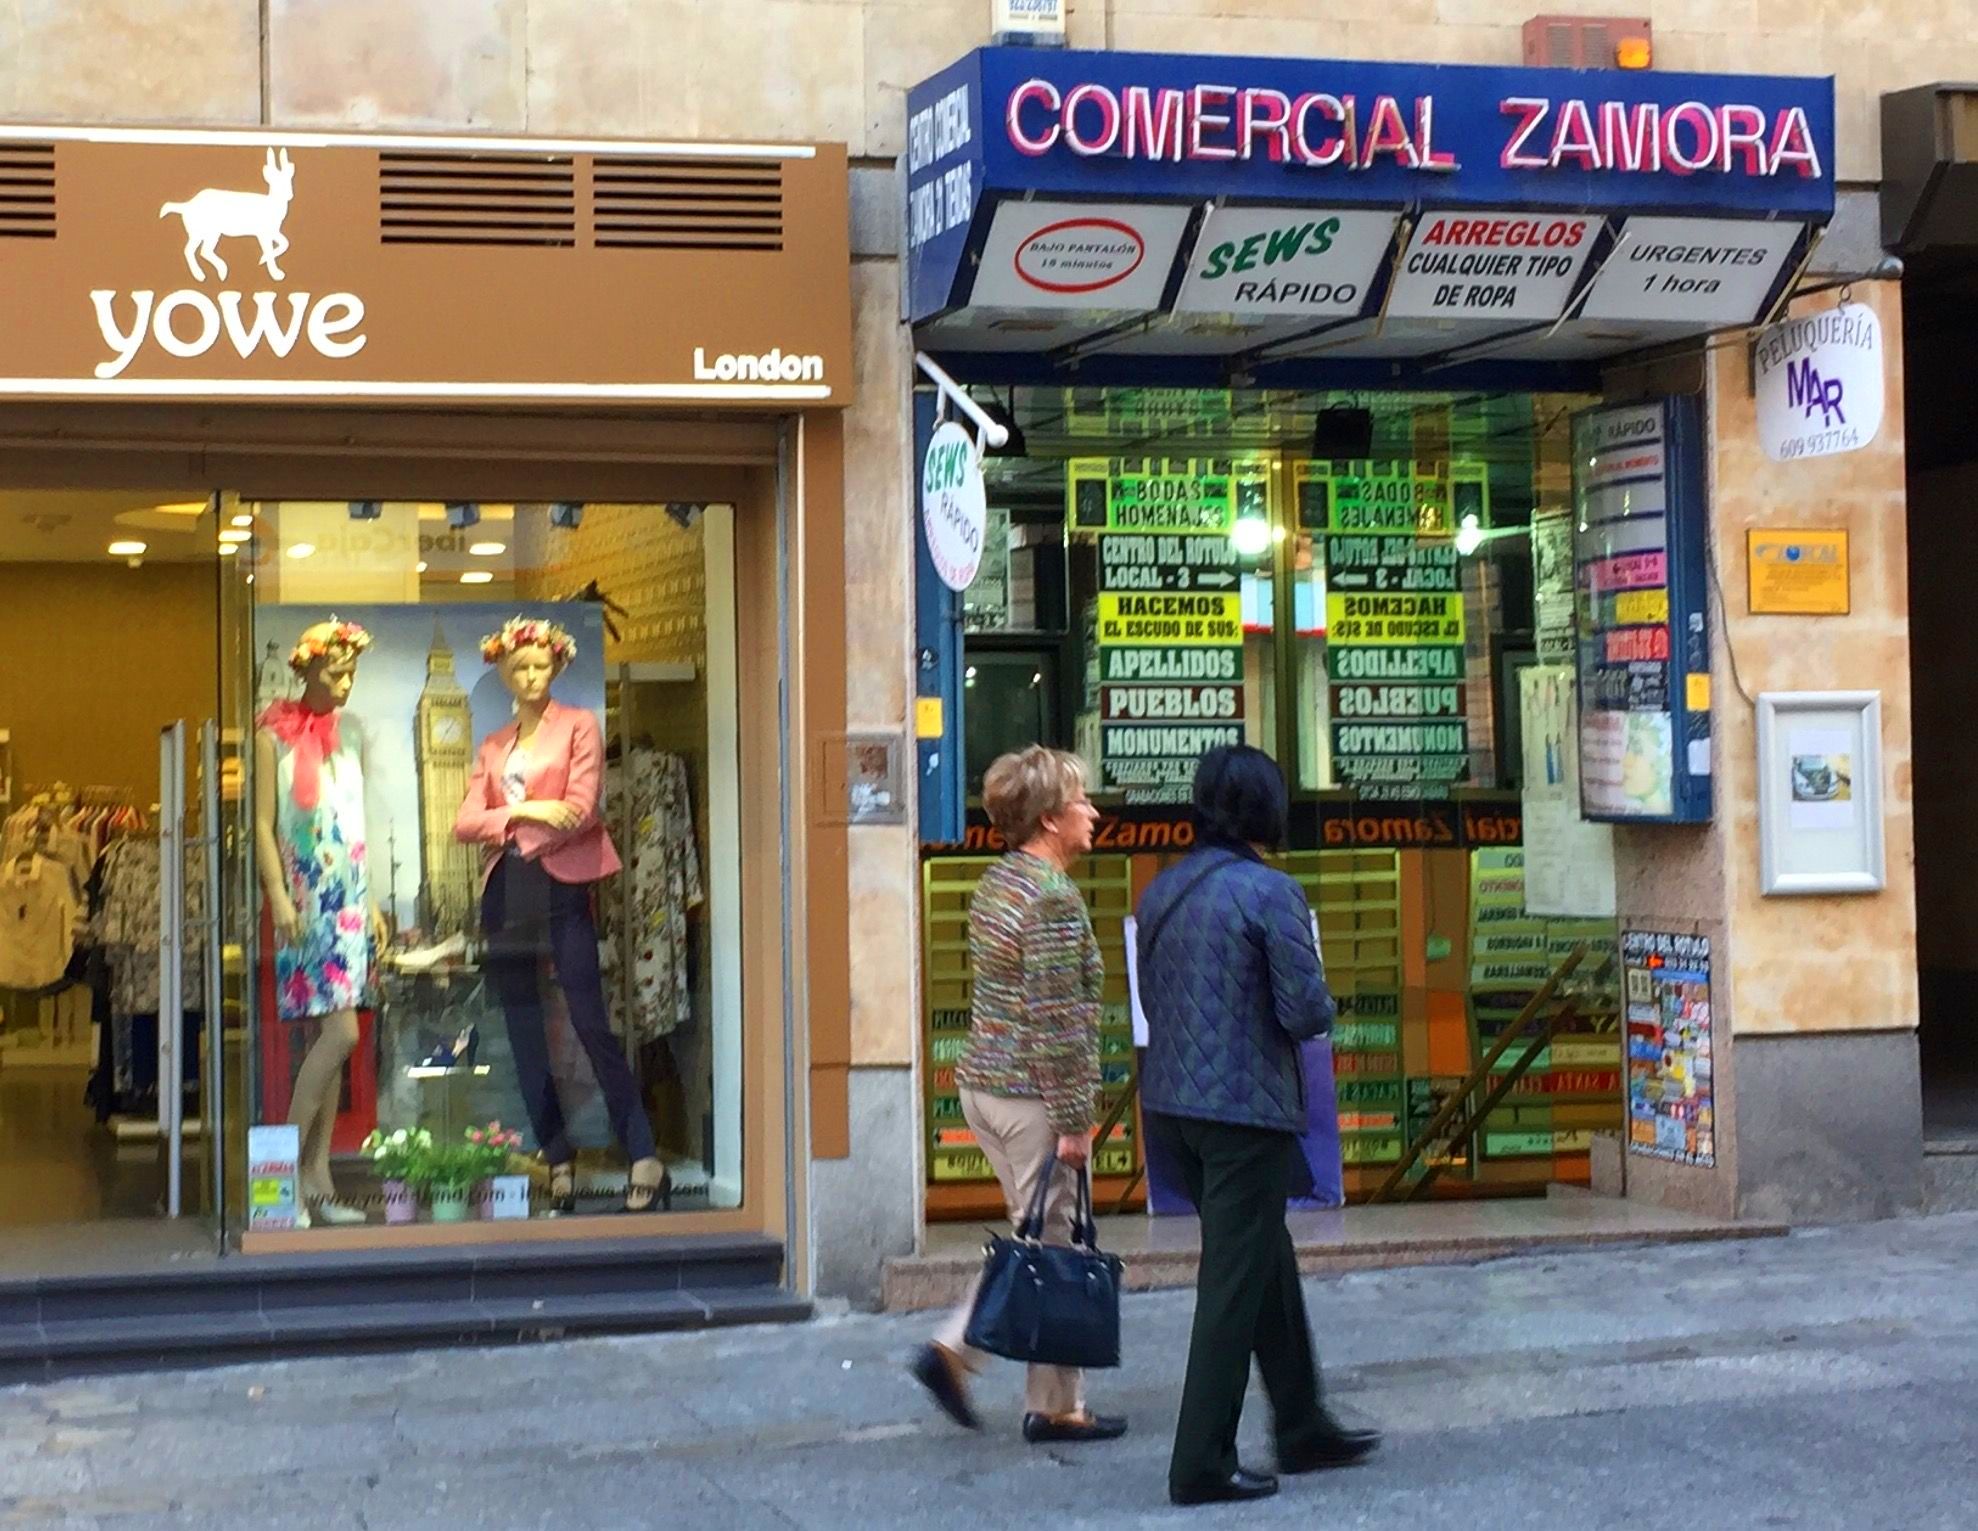 Sews Calle Zamora 